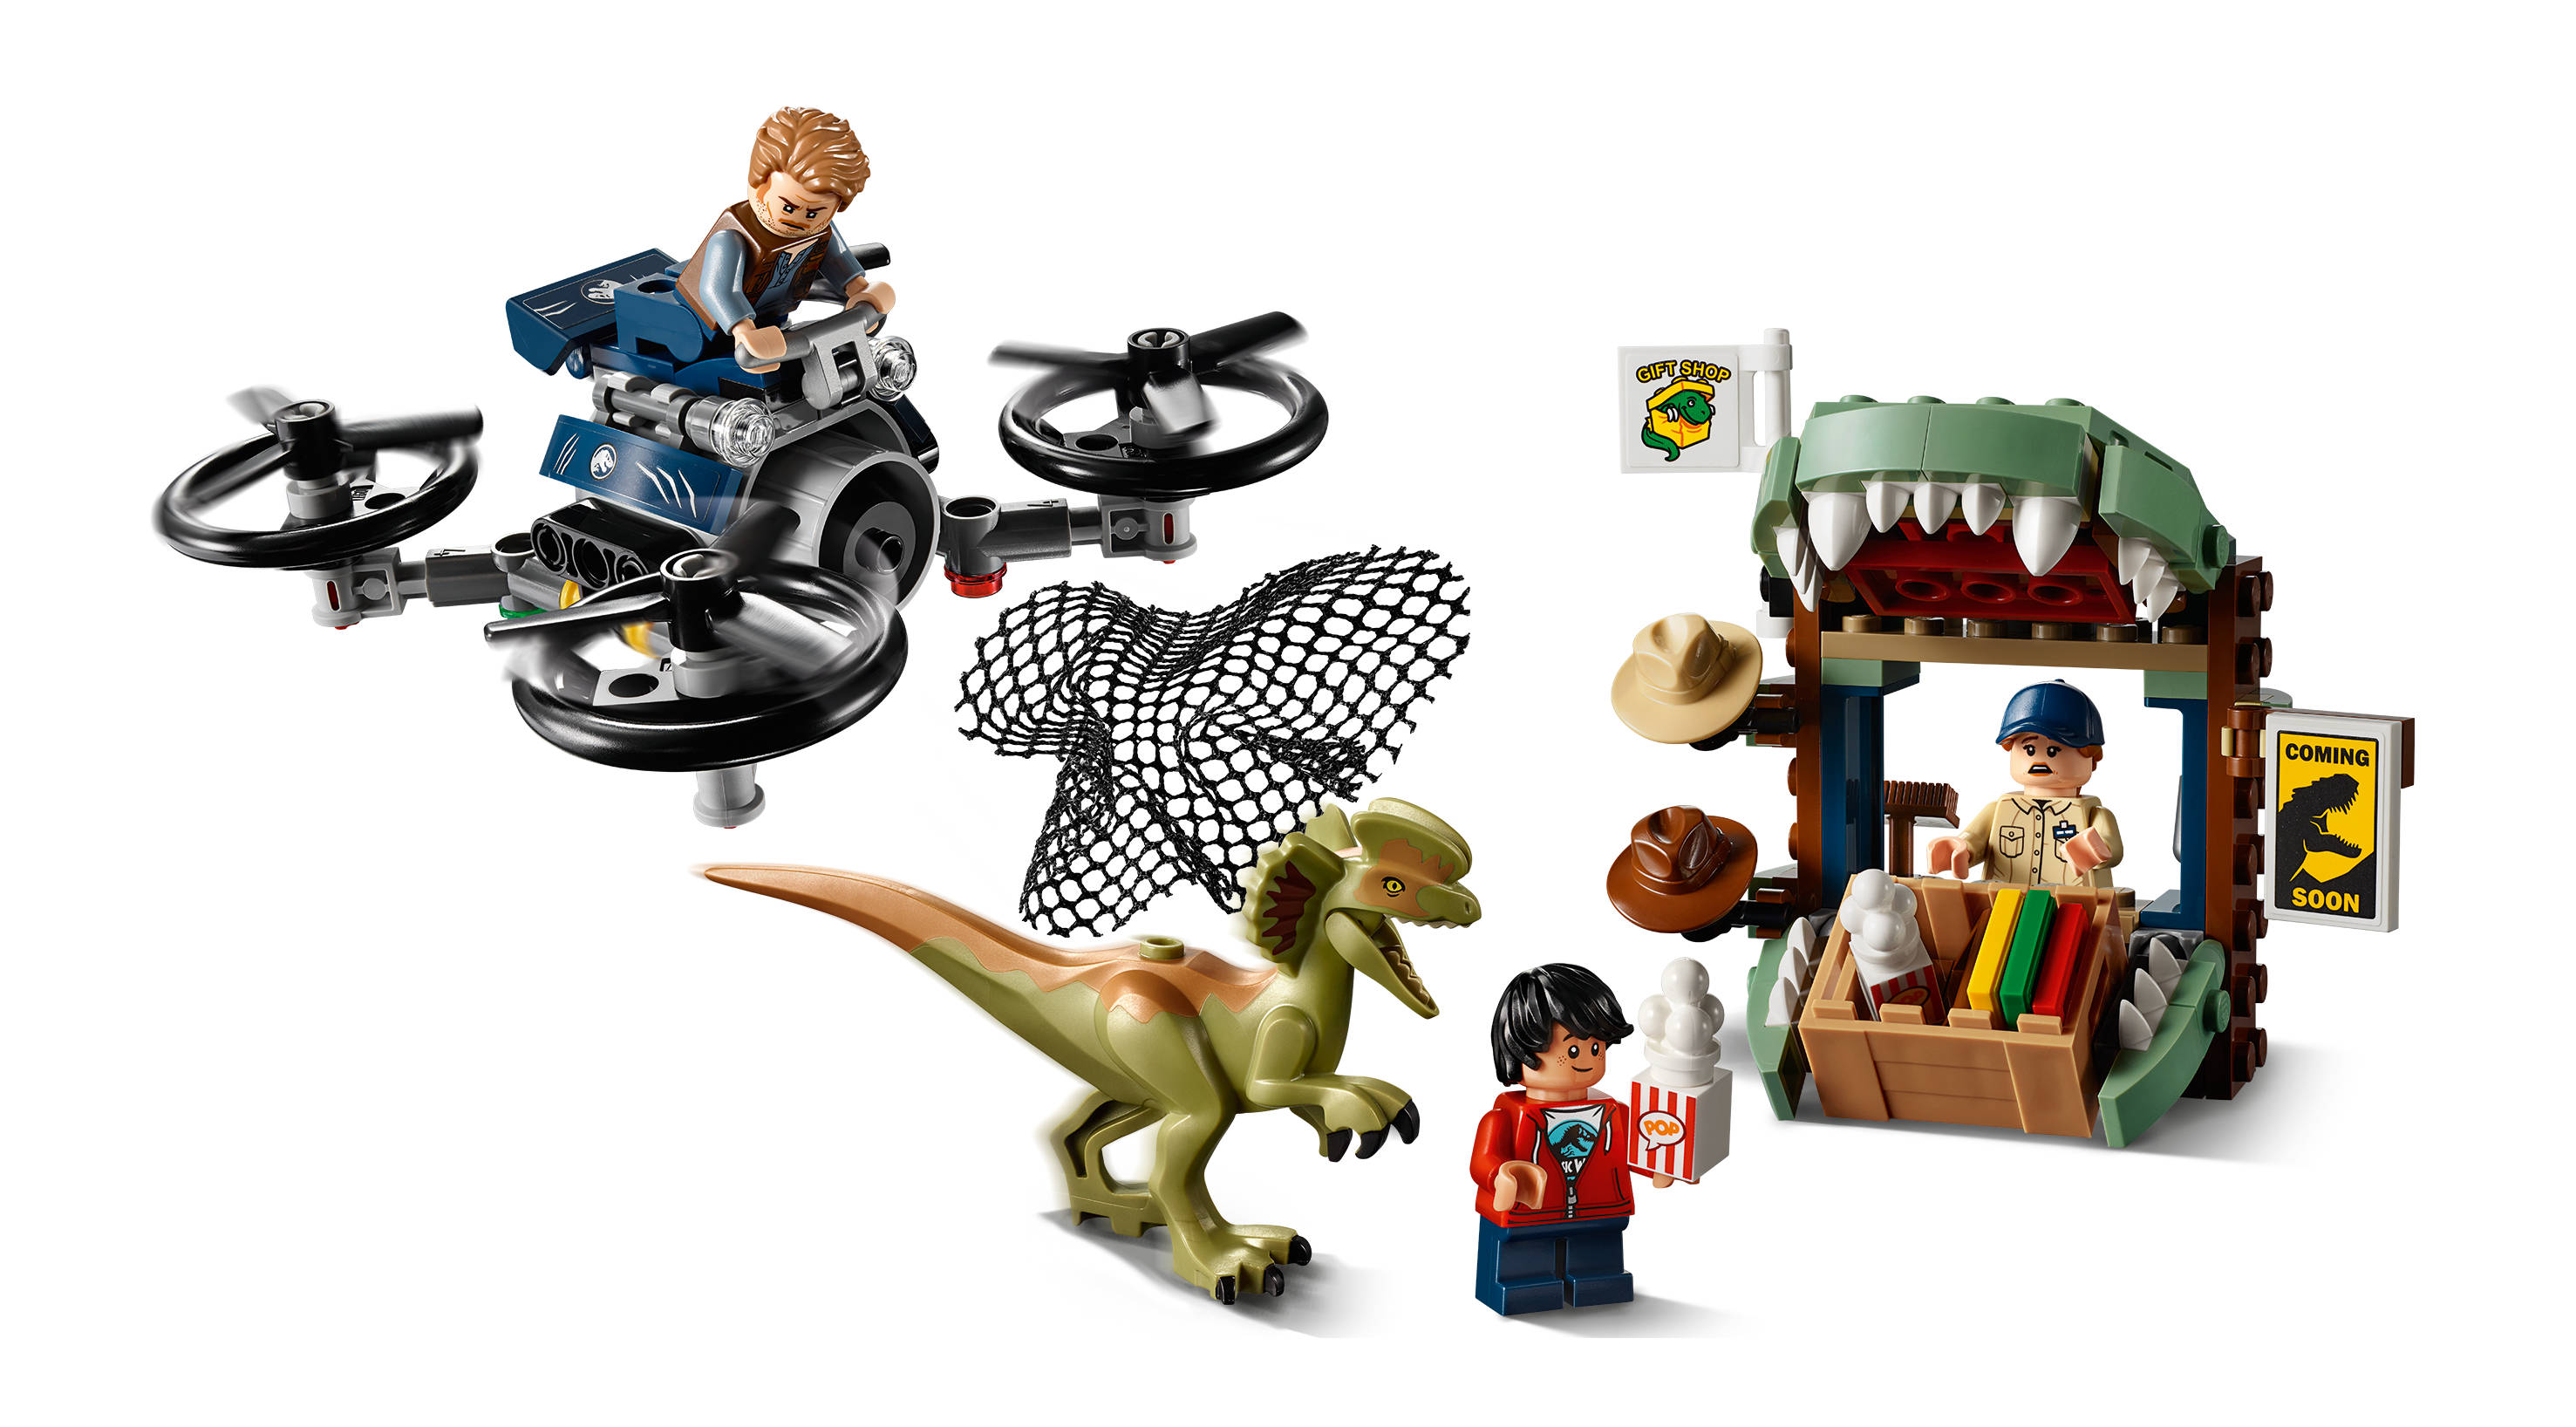 New LEGO Jurassic World Sets: Legend of Isla Nublar - FBTB